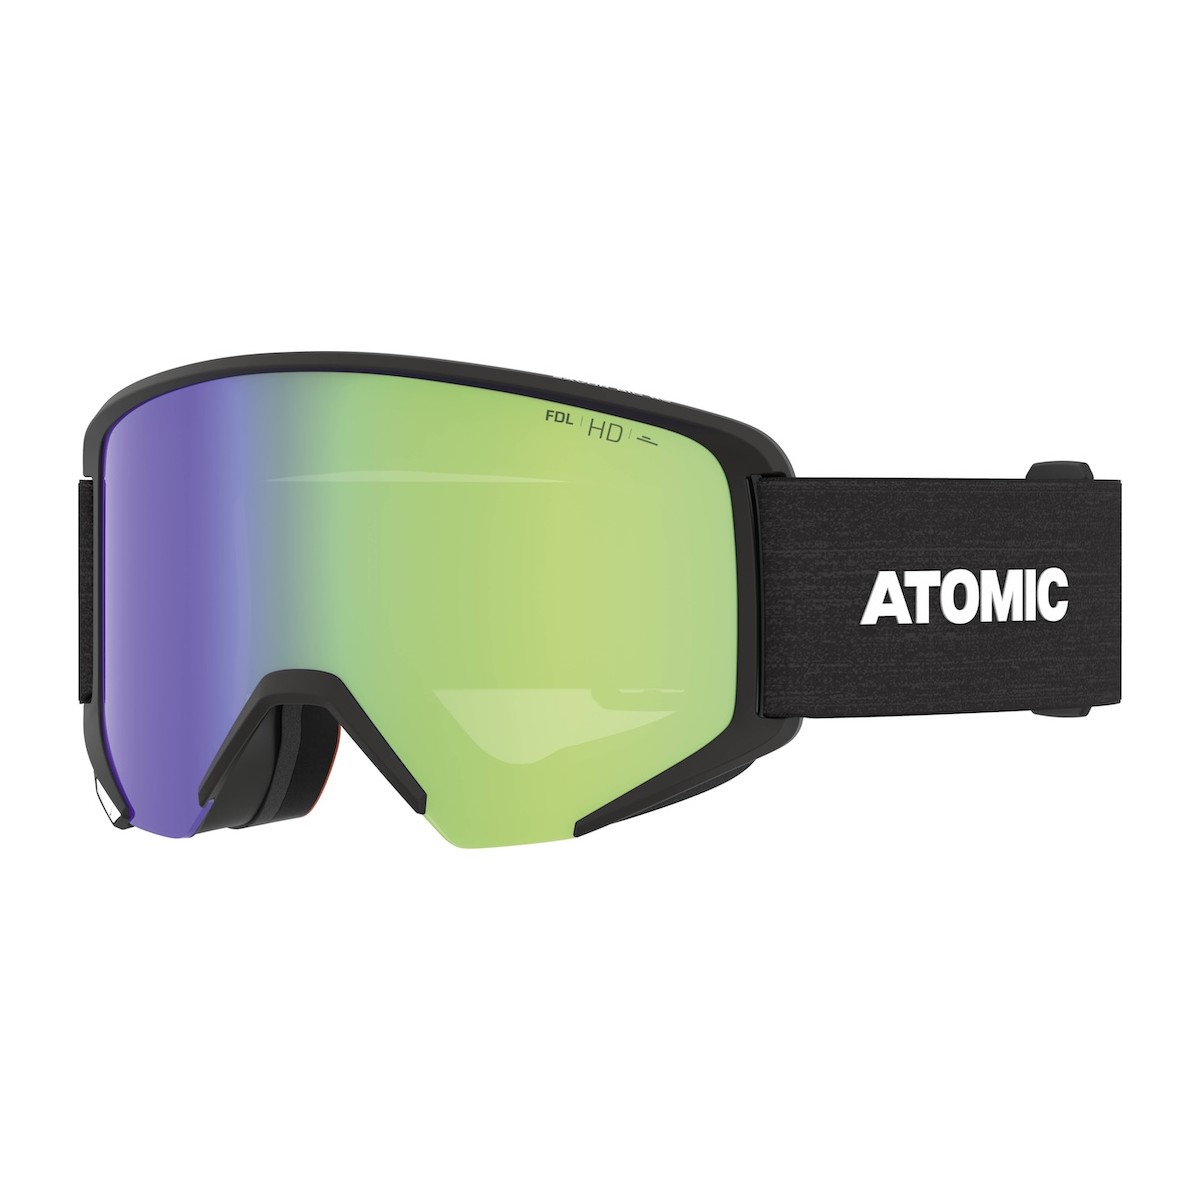 ATOMIC SAVOR BIG HD RS W/GREEN HD C2-3 W/YELLOW BLUE HD C2-3 W/CLEAR C0 goggles - black